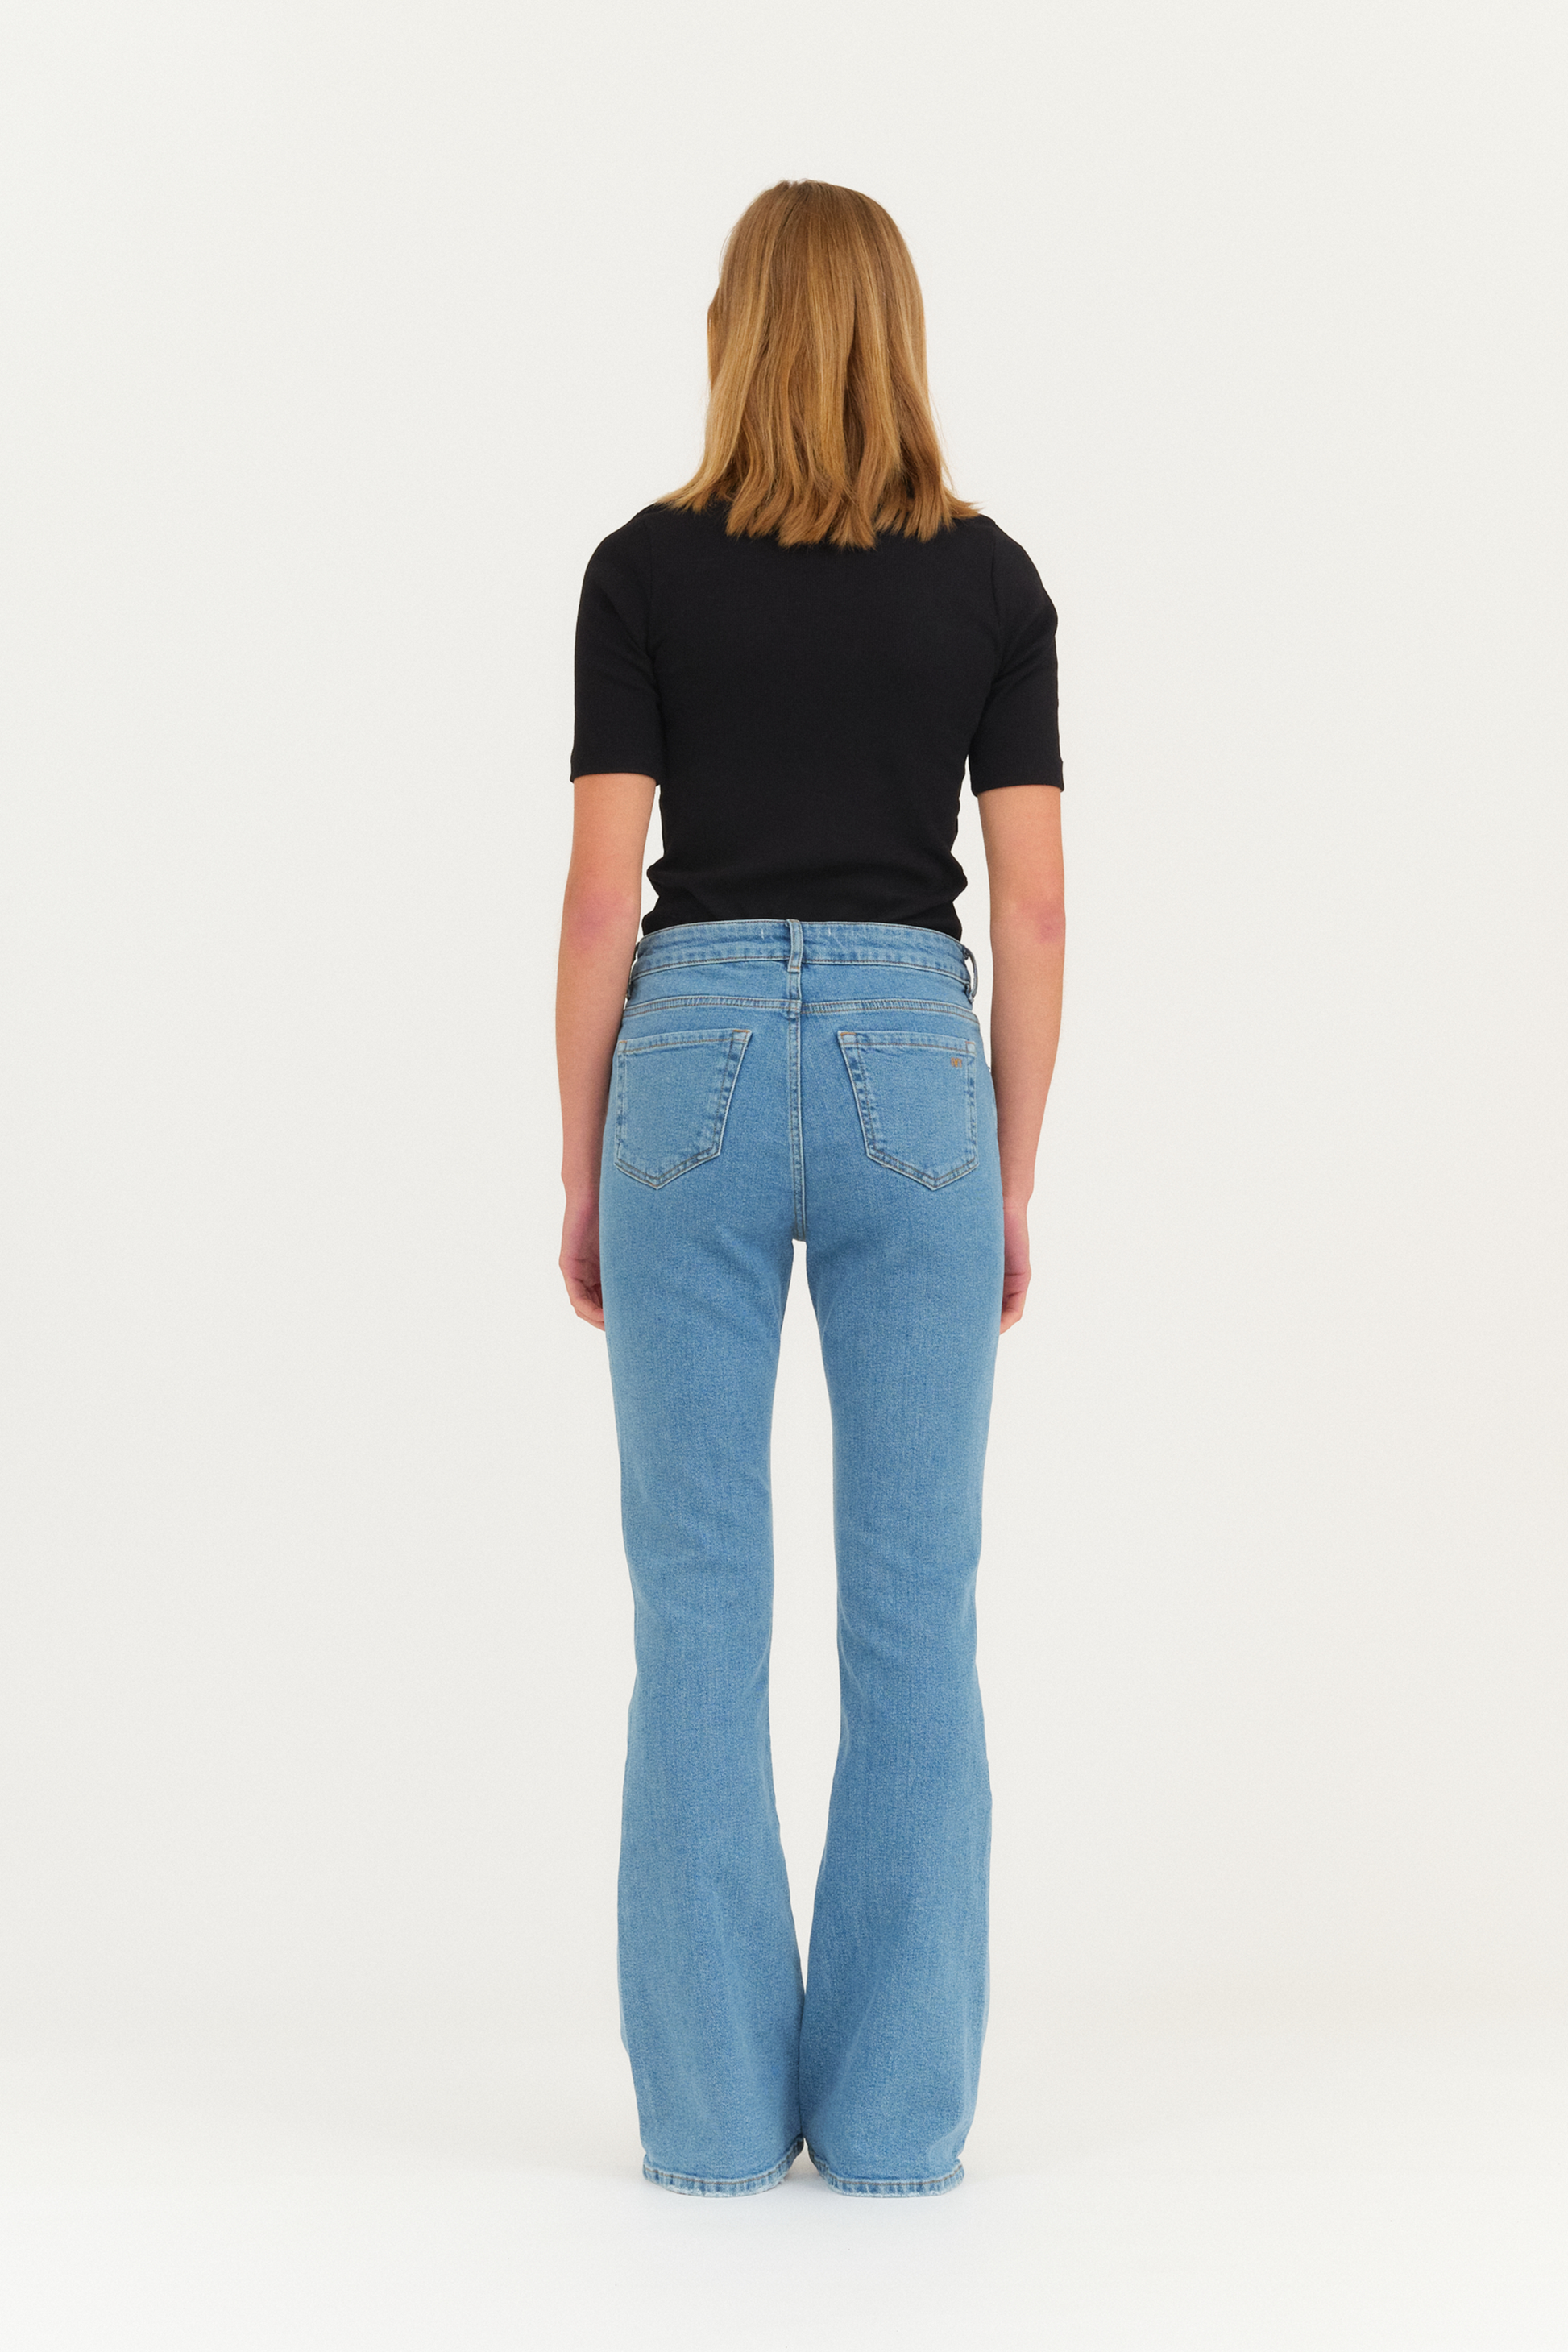 IVY Copenhagen IVY-Charlotte Jeans Wash Vintage York Jeans & Pants 51 Denim Blue